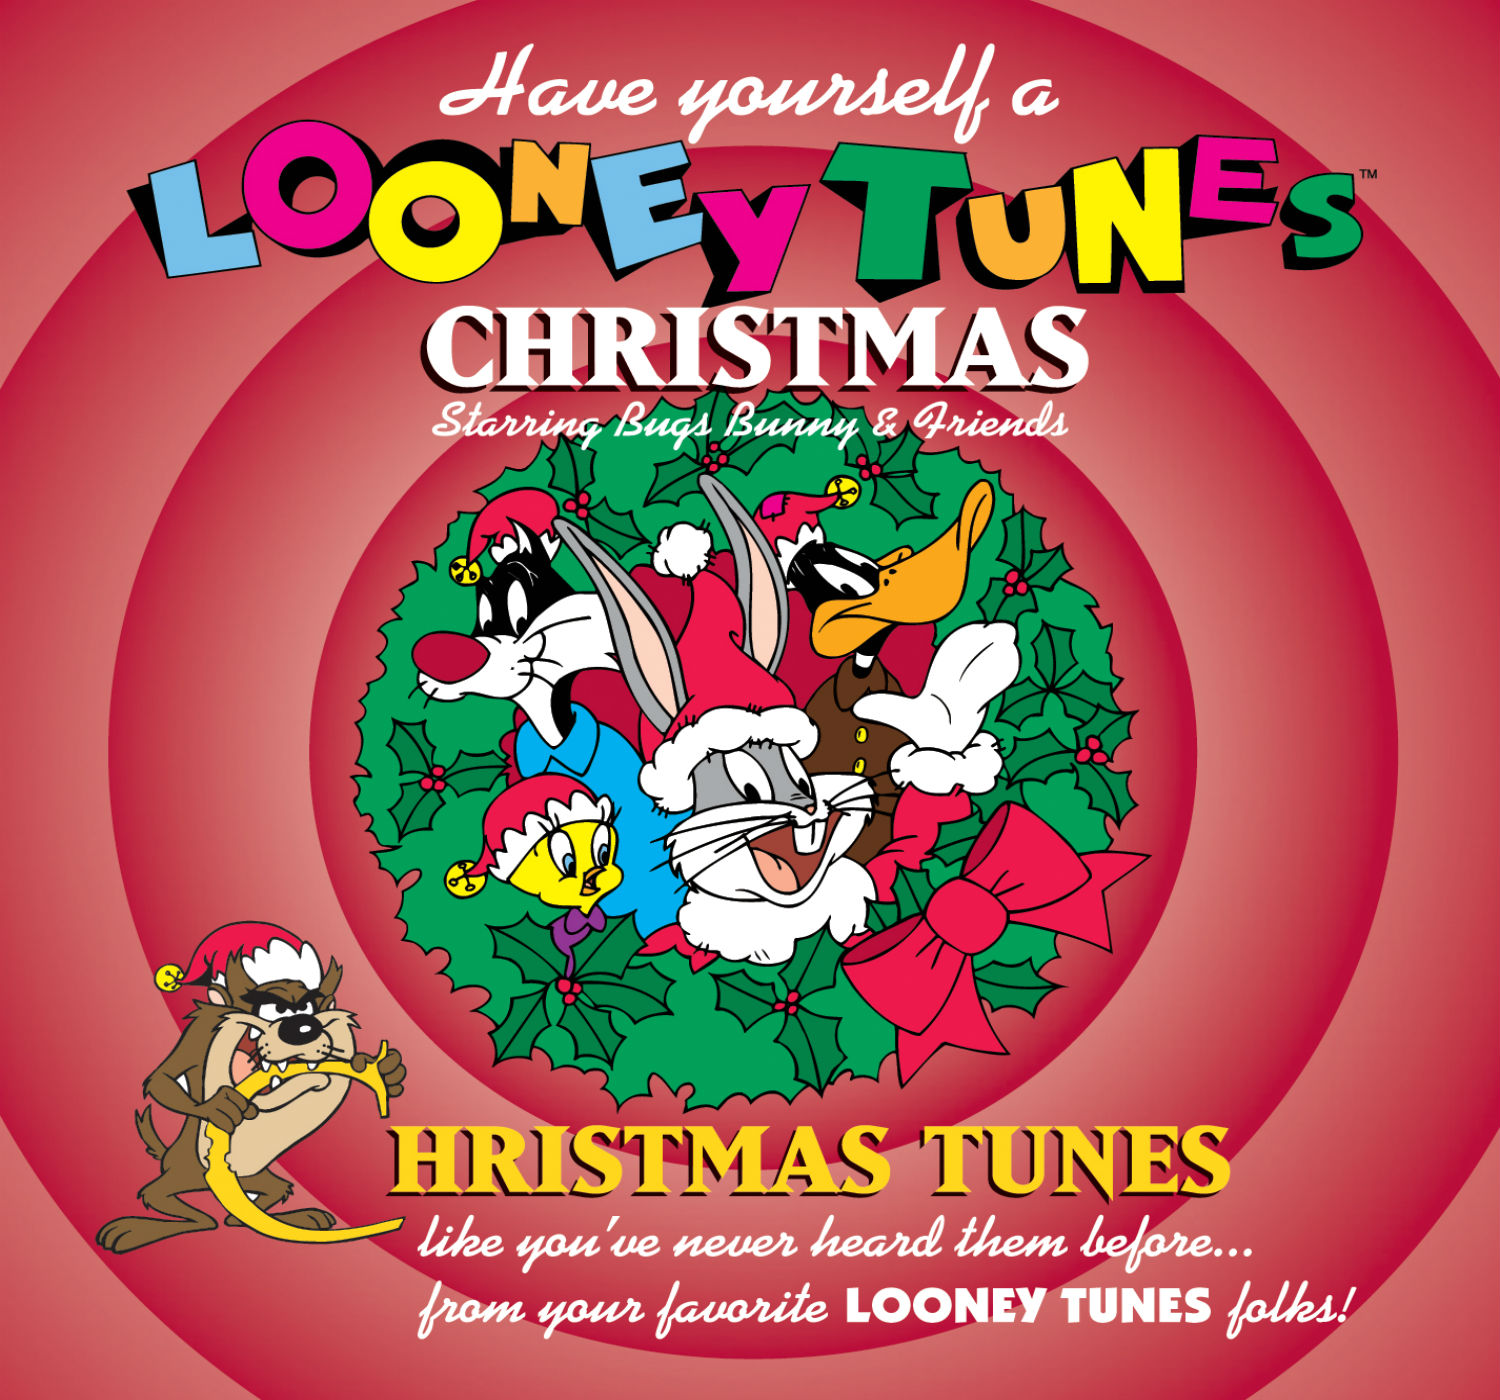 Looney tunes christmas bugs bunny fa wallpaper 1500x1400 184441 1500x1400